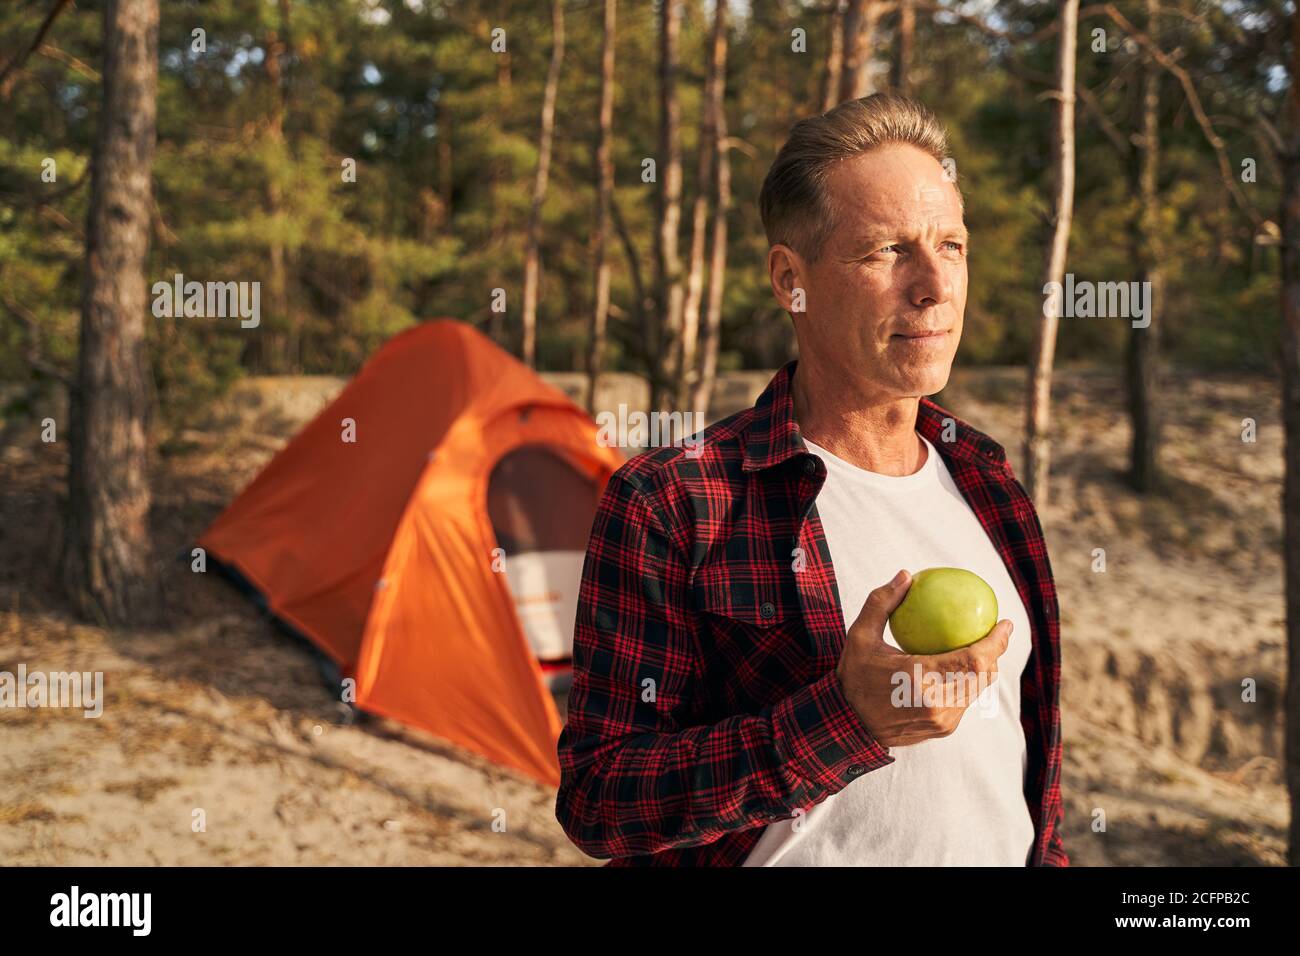 Man eating fresh fruit while going camping Stock Photo